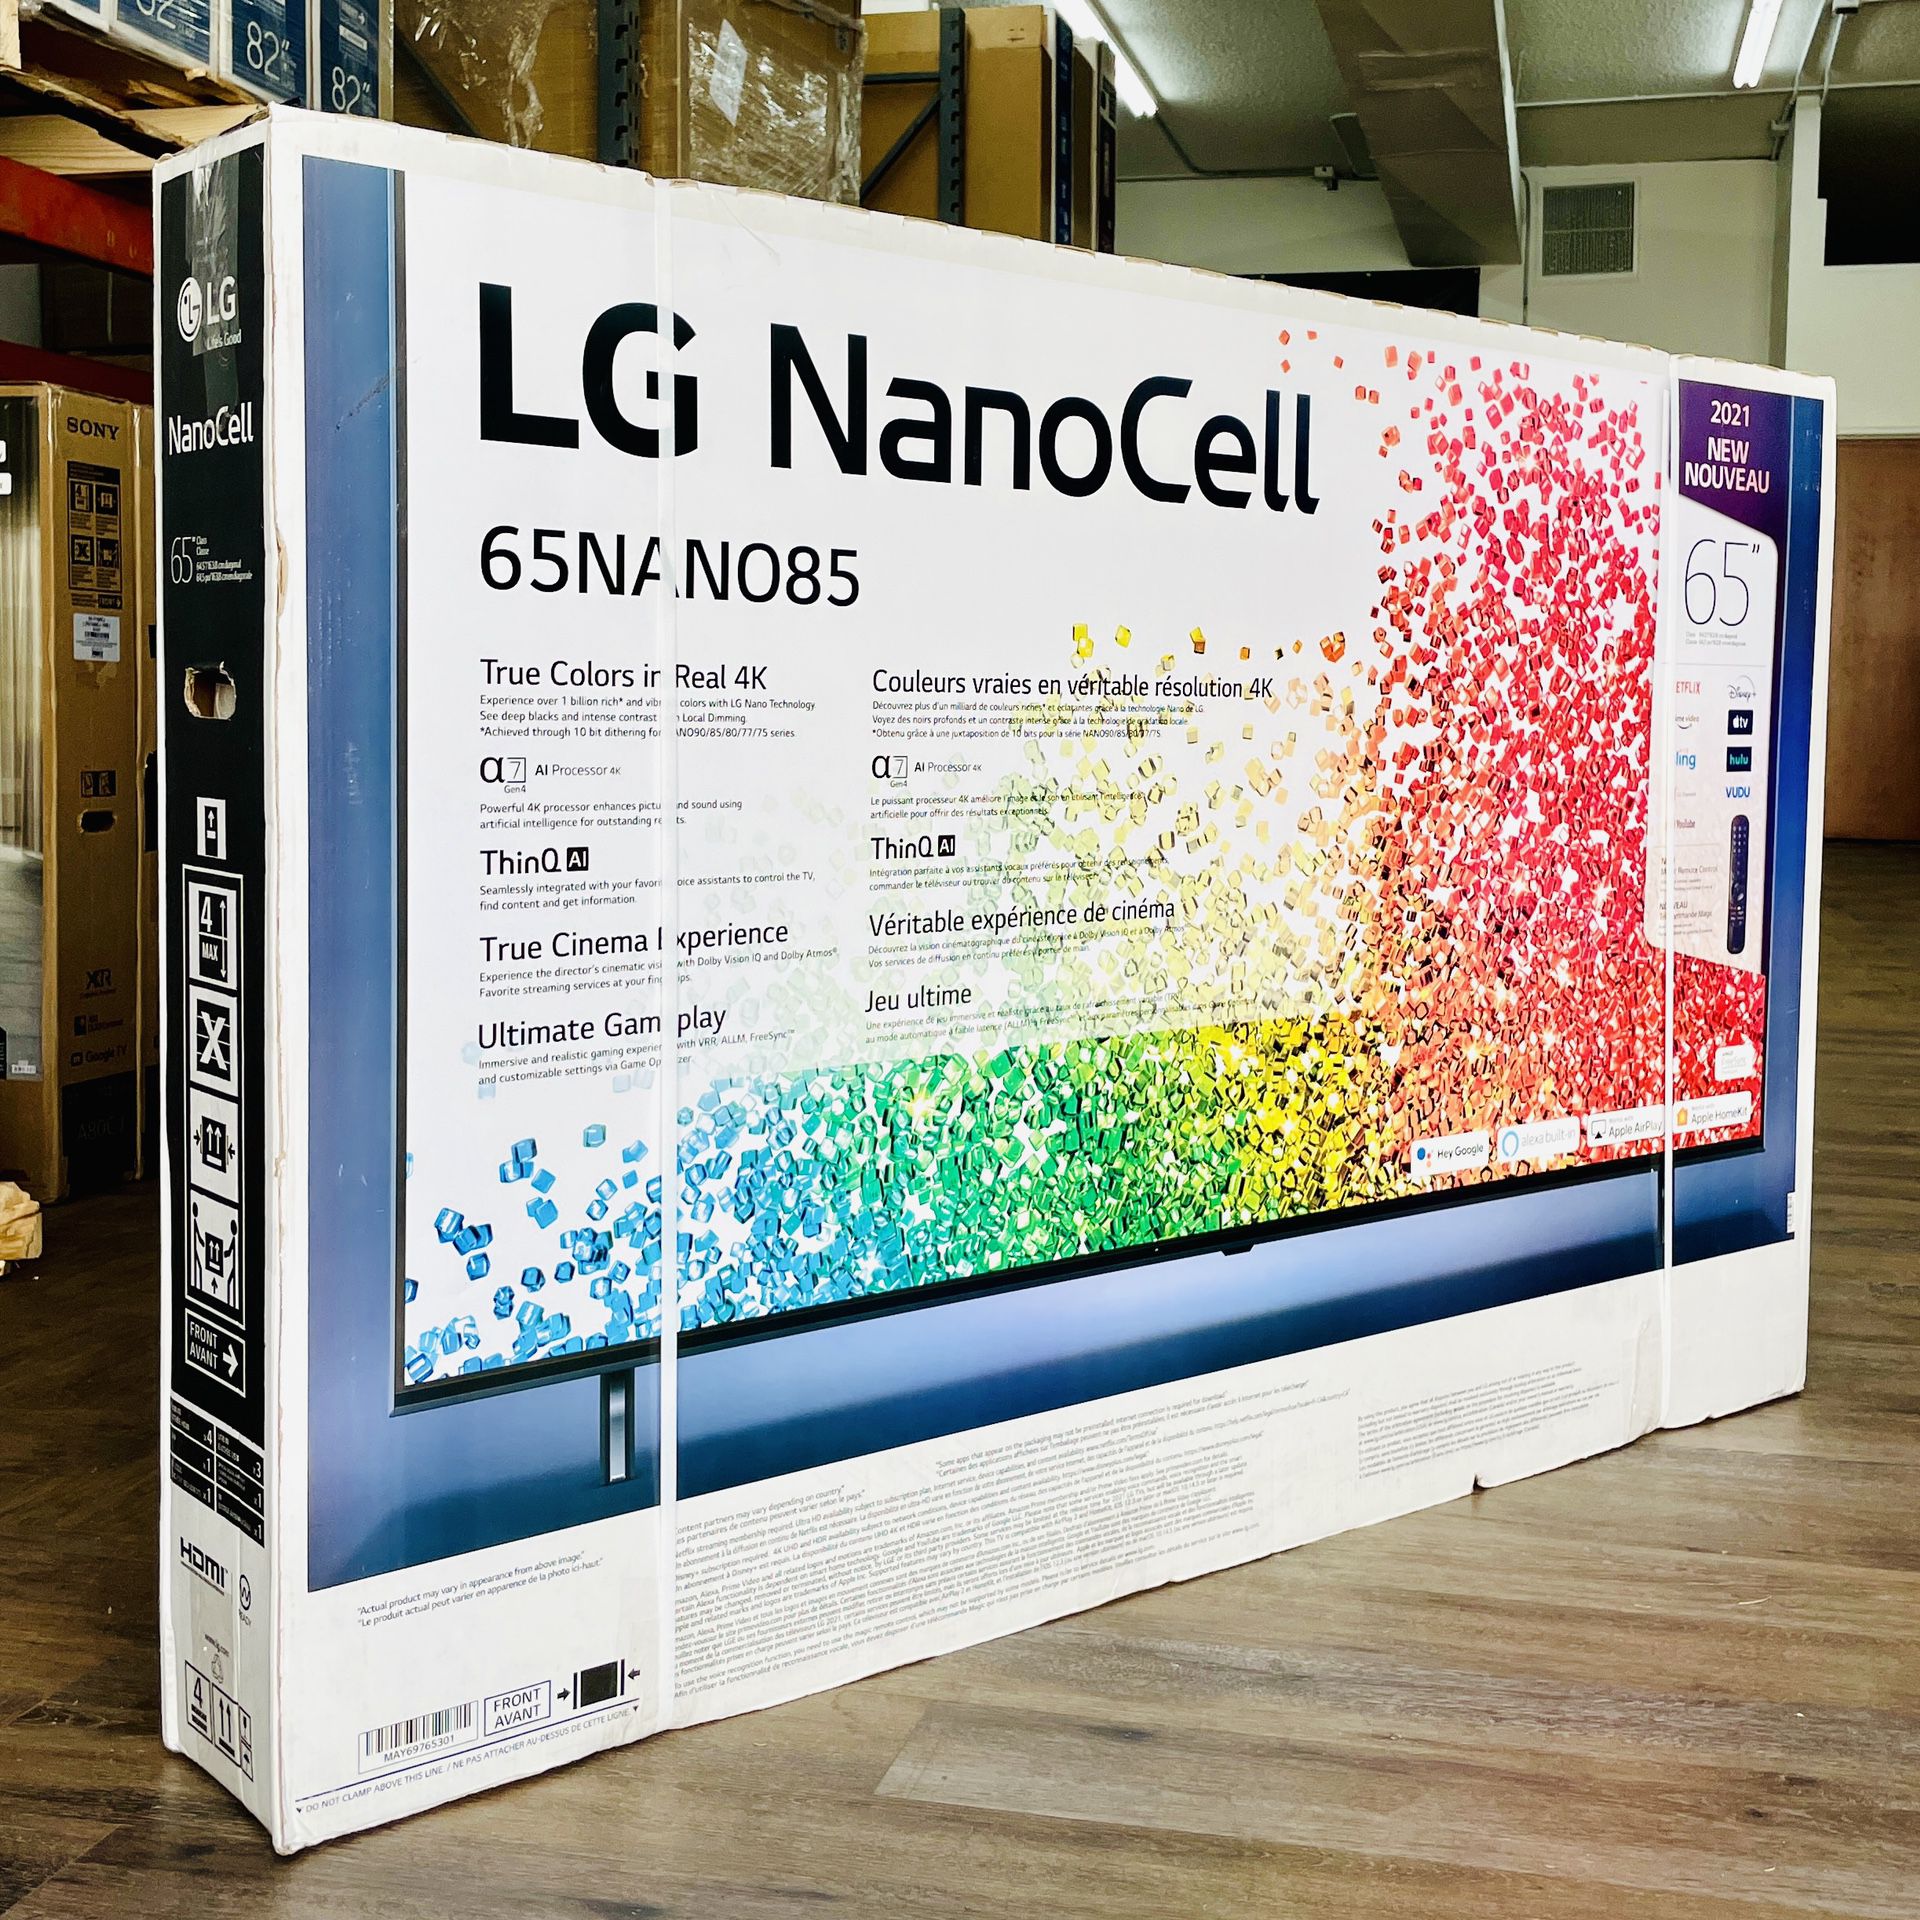 LG 65” NANO CELL 4K SMART TV - 120HZ HDMI 2.1 - AMAZING COLORS - SUPER THIN! $50 DOWN TAKE IT HOME